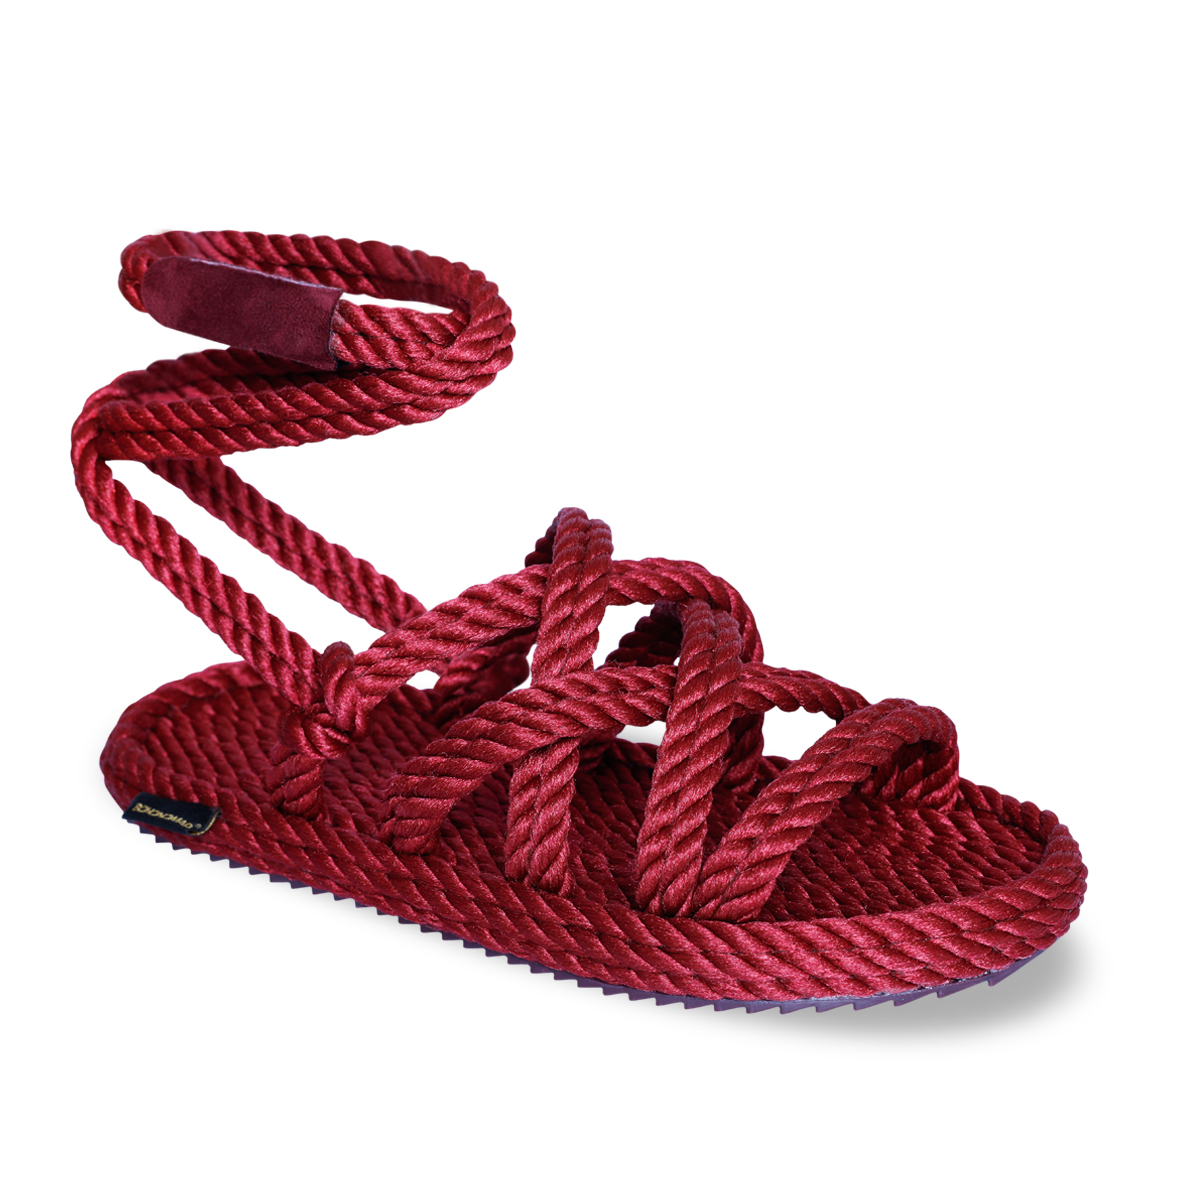 Rome Sandalia de Cuerda para Mujer – Rojo Clarete